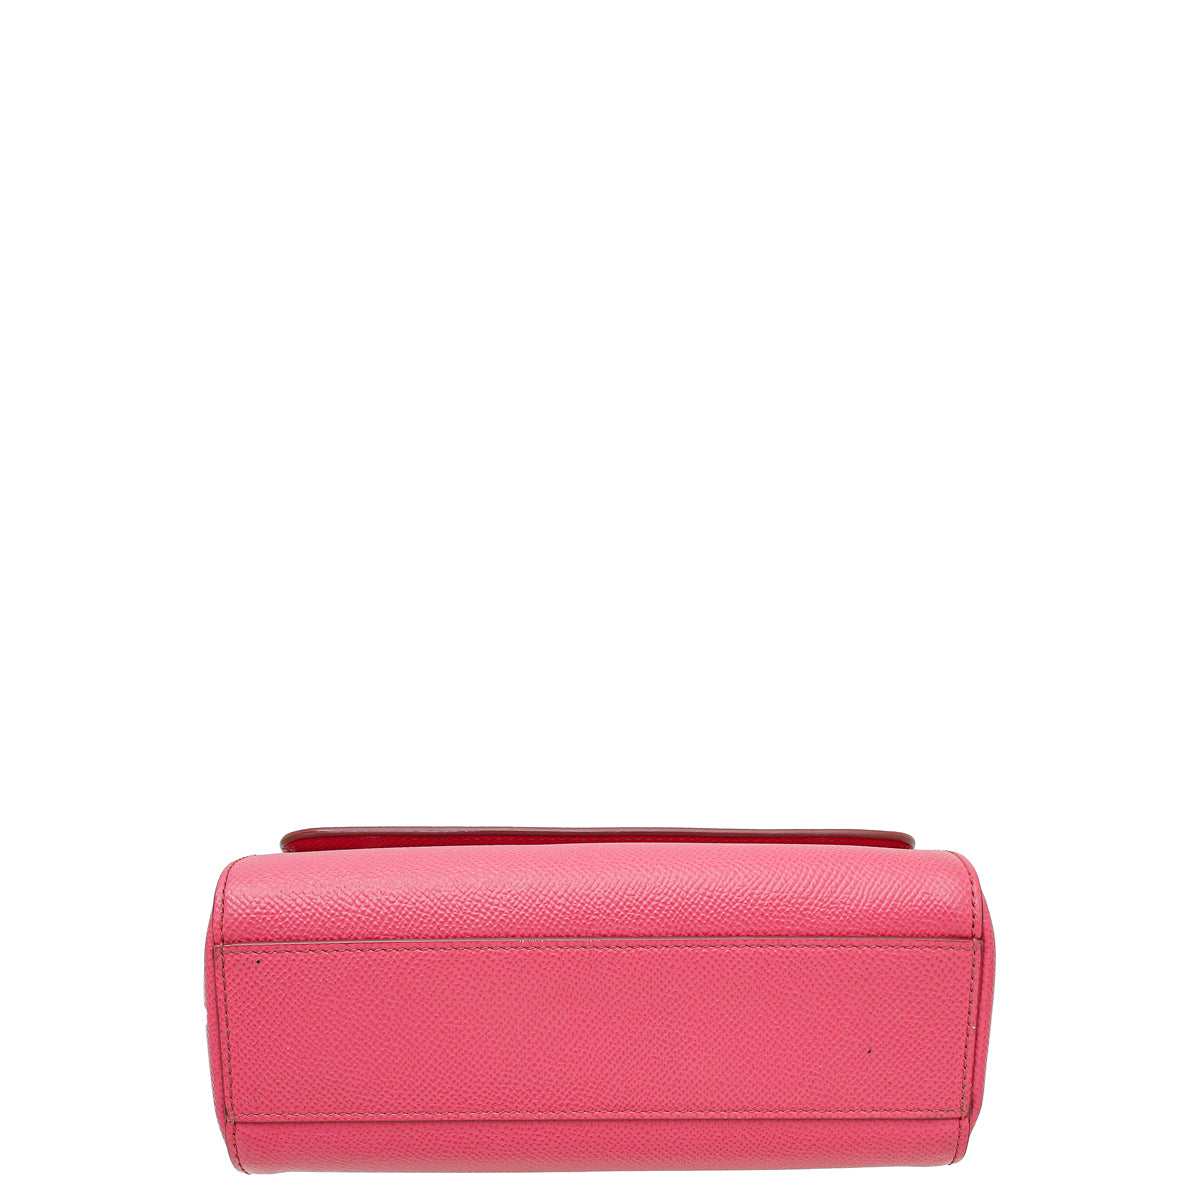 Dolce & Gabbana Pink Dauphine Sicily Small Bag